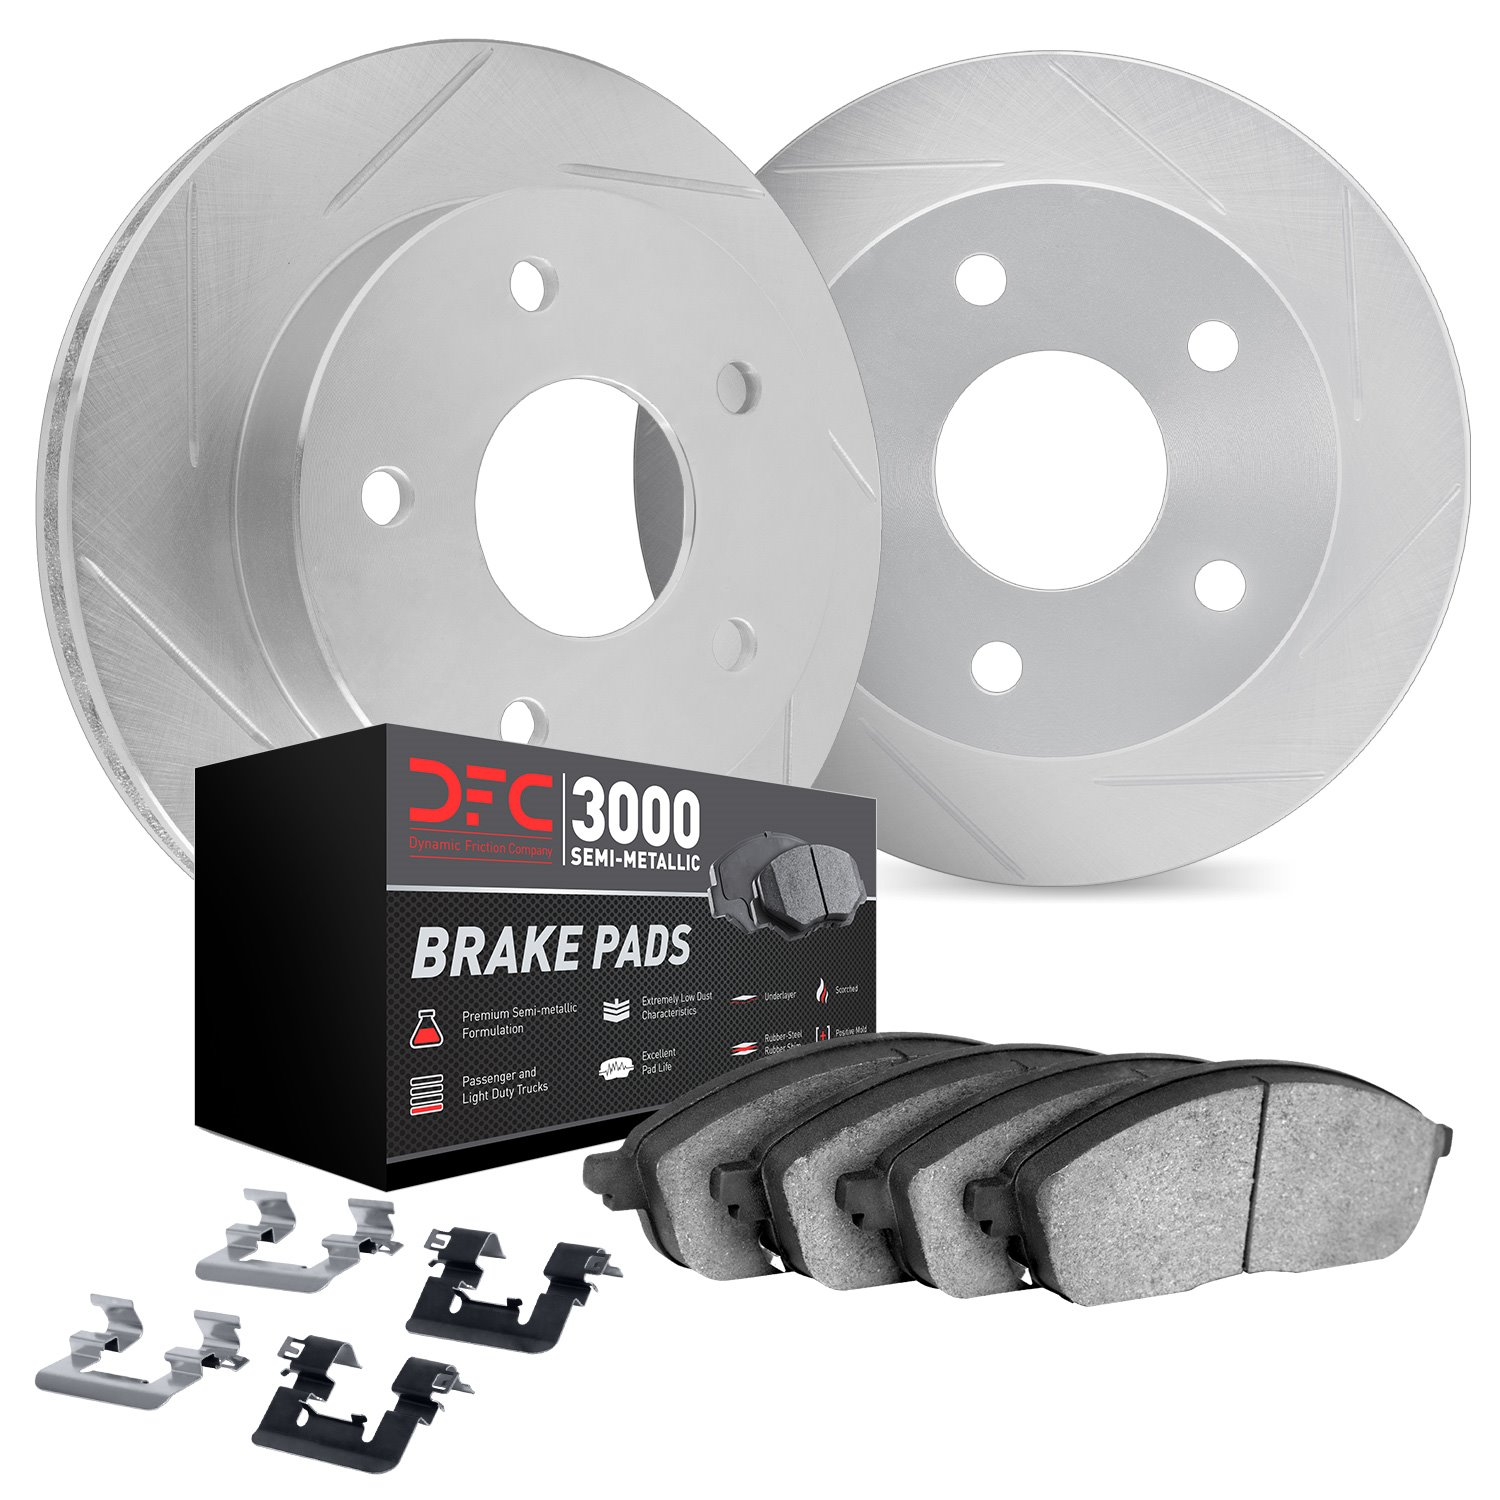 5112-73084 Slotted Brake Rotors with 3000-Series Semi-Metallic Brake Pads Kit & Hardware [Silver], Fits Select Audi/Volkswagen,